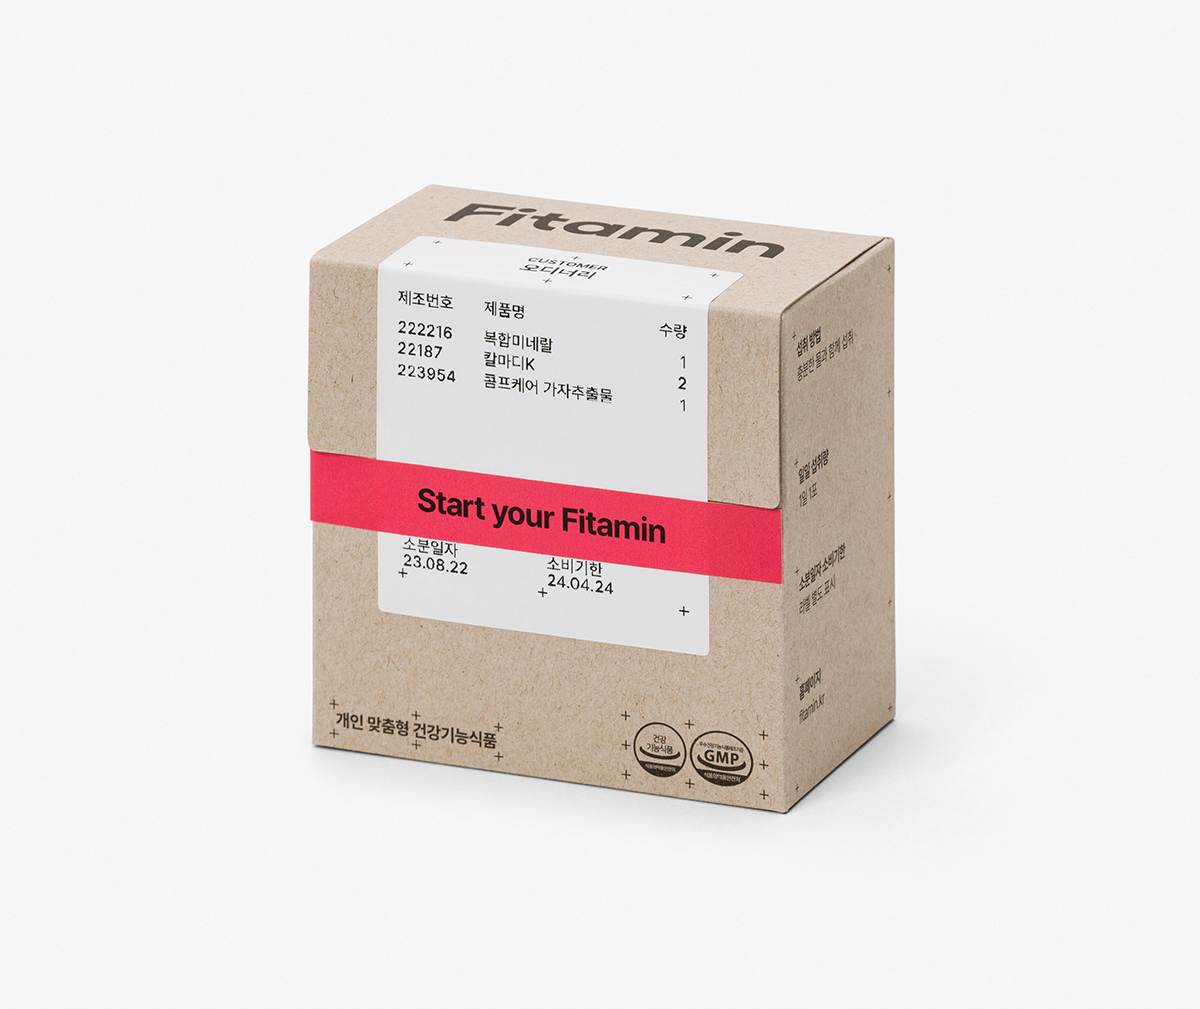 Fitamin保健品包装设计